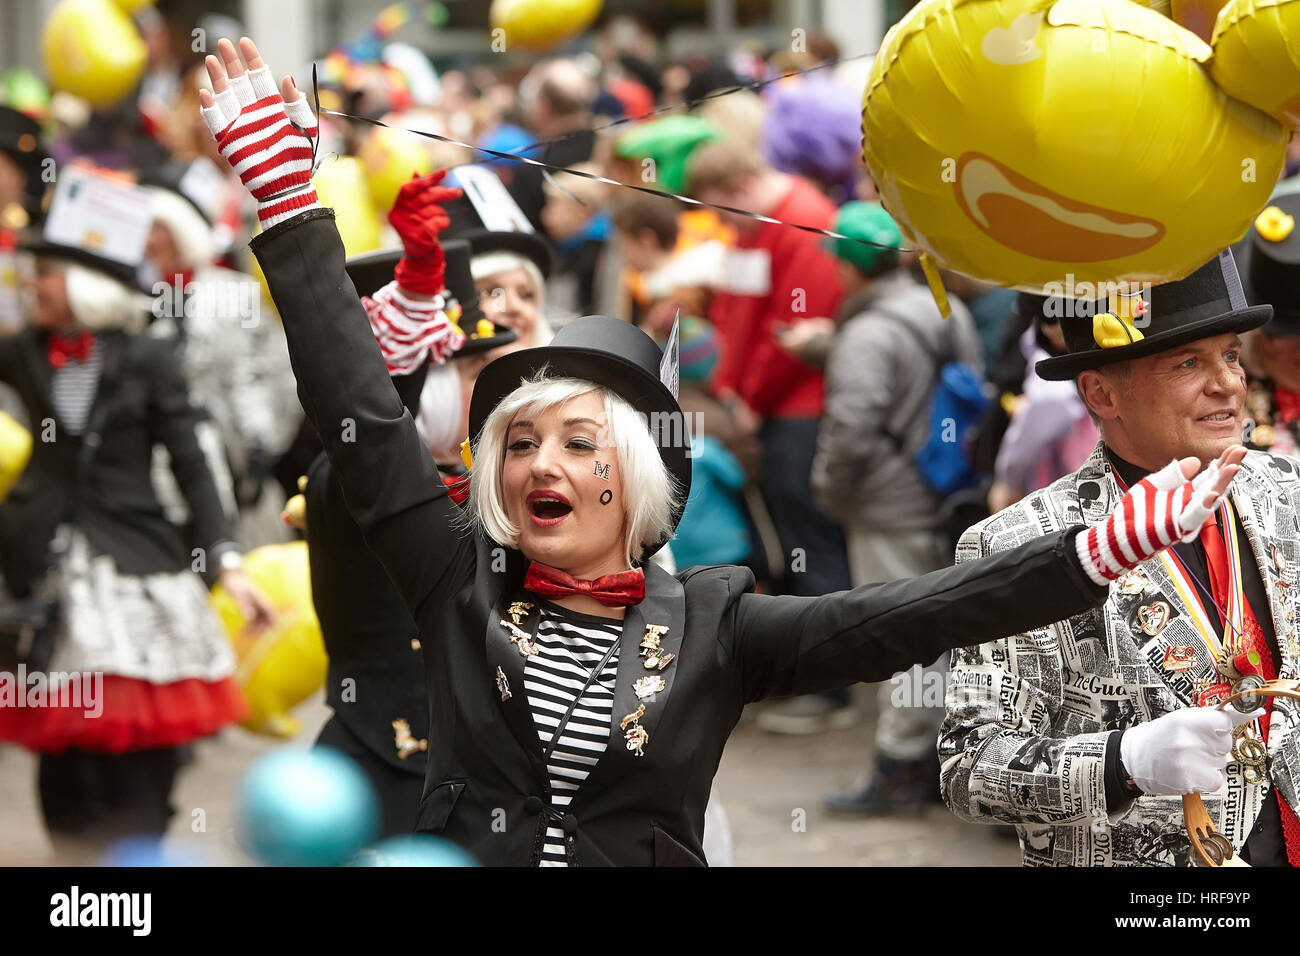 People in costumes celebrate Carnival, Rosenmontag parade Koblenz, Rhineland-Palatinate, Germany Stock Photo